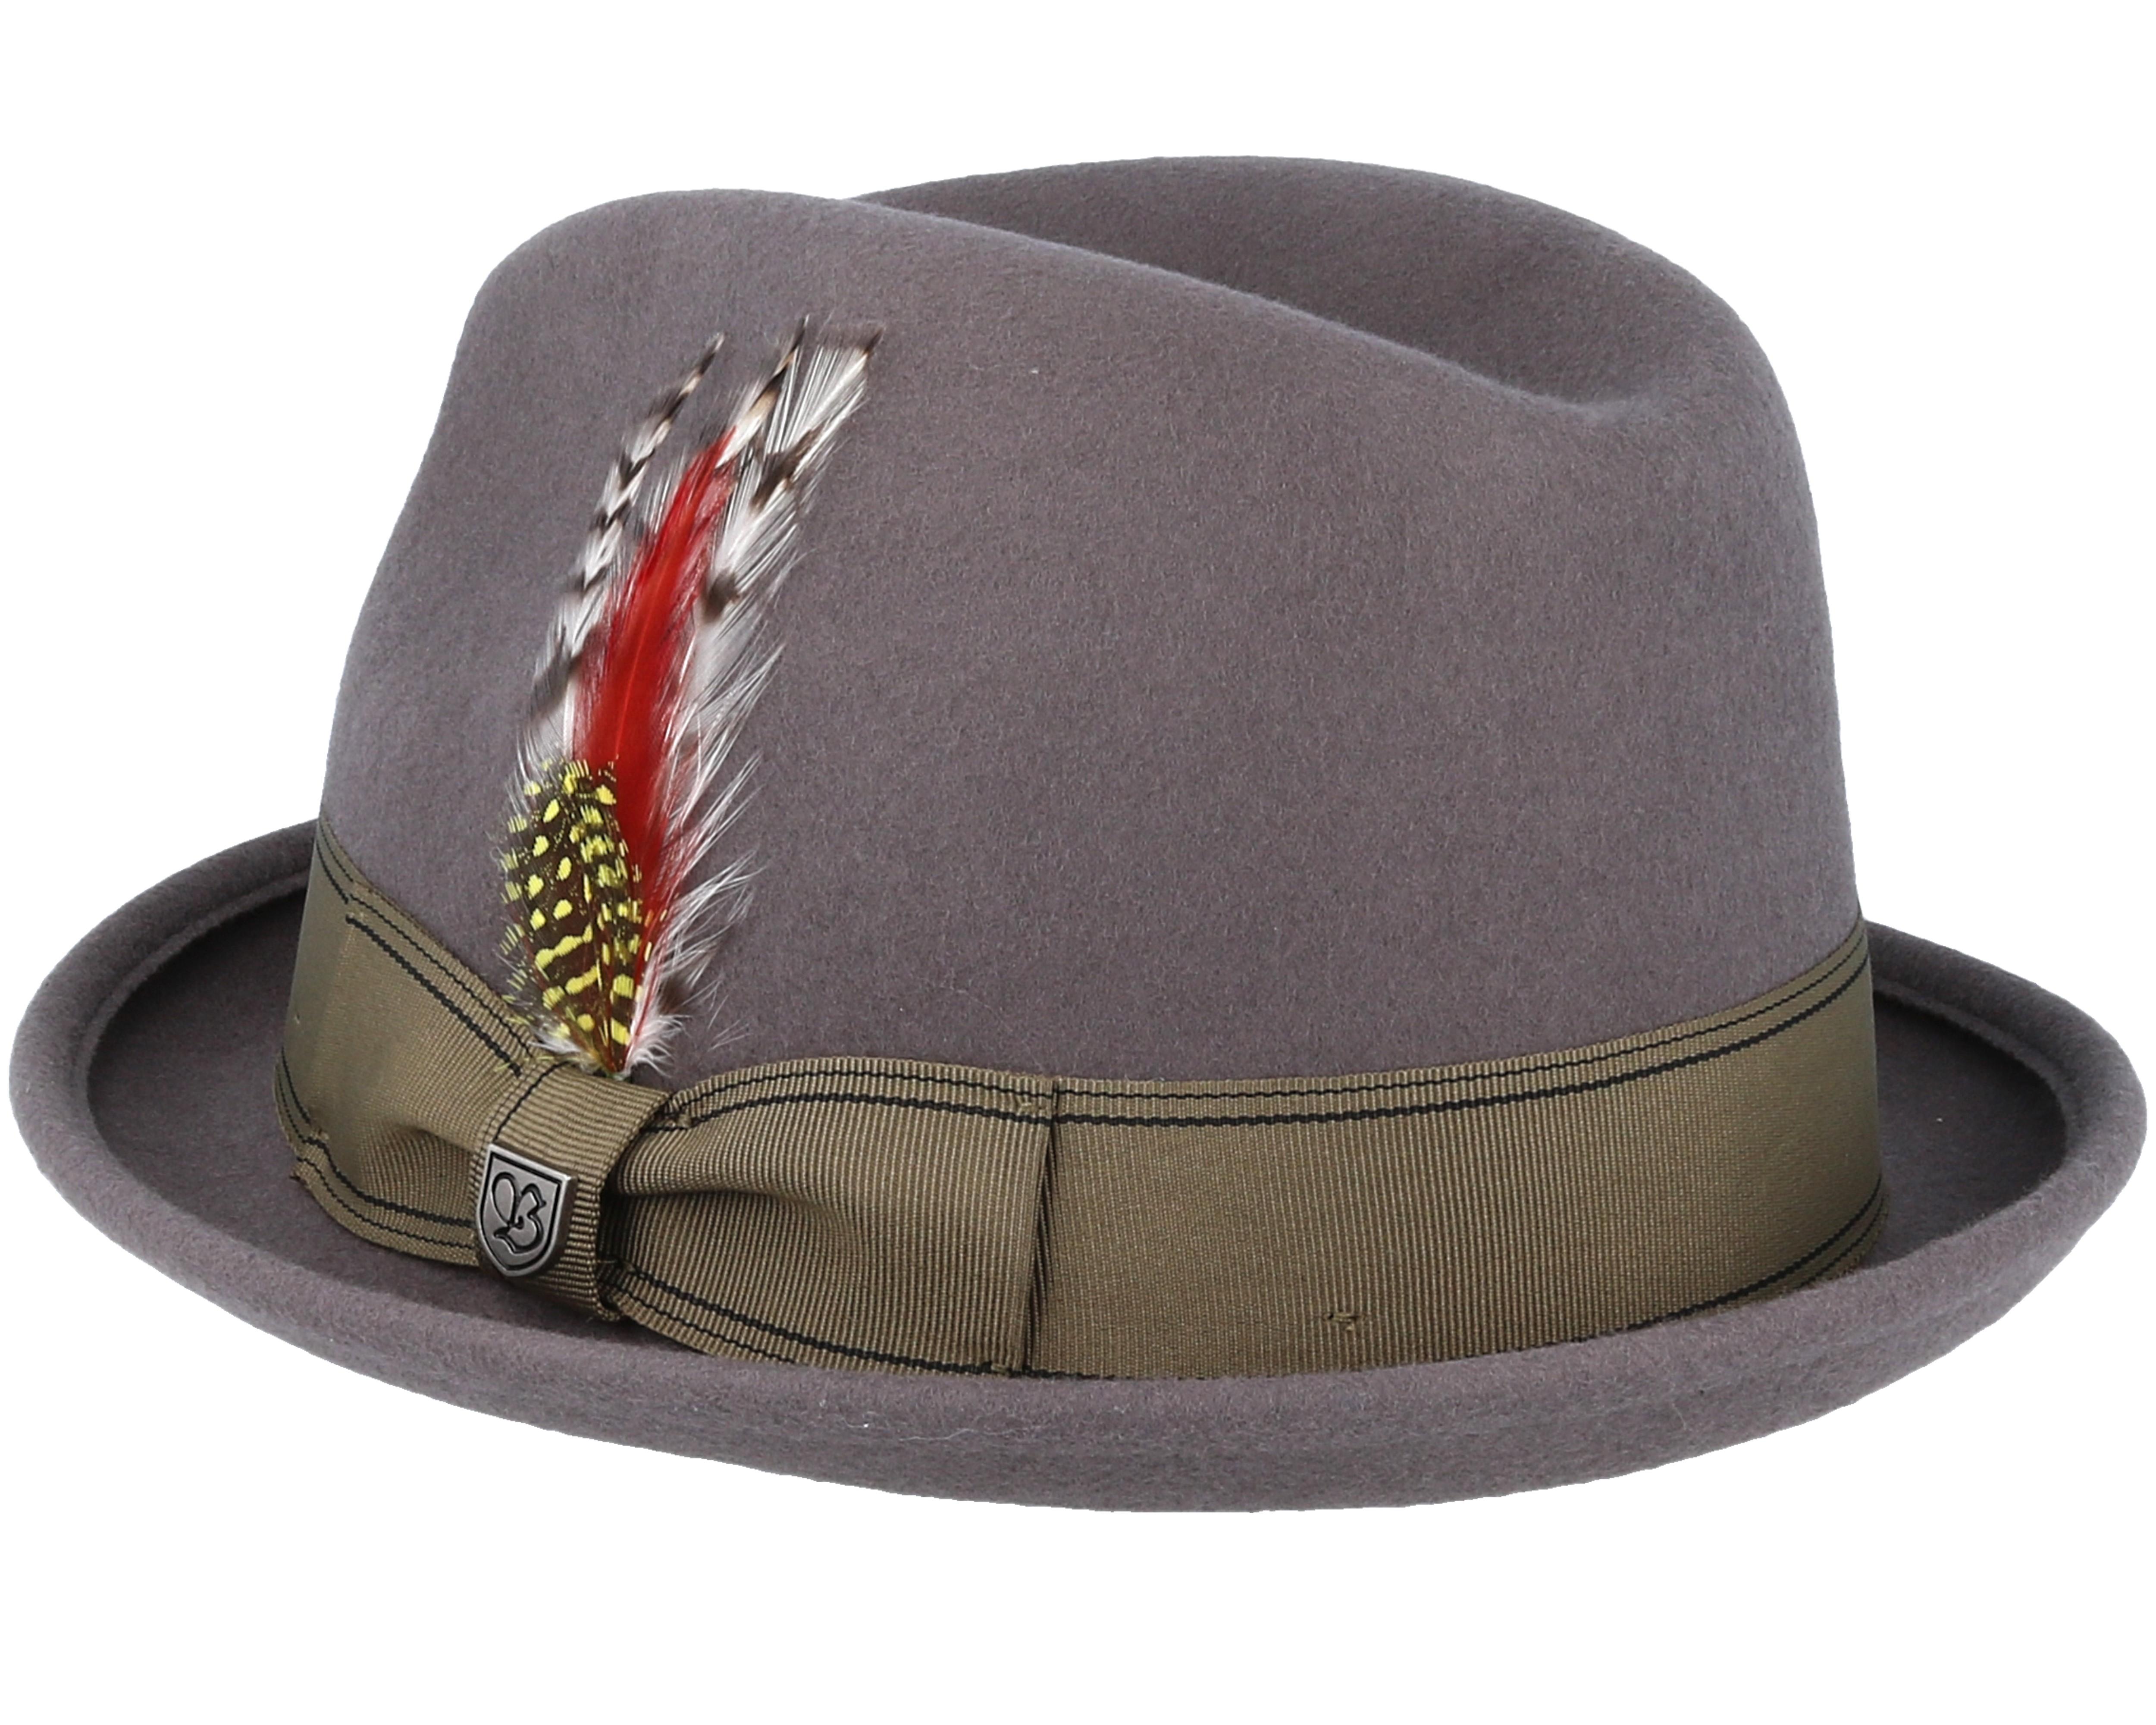 Gain Grey/Gold Fedora - Brixton hats | Hatstore.co.uk